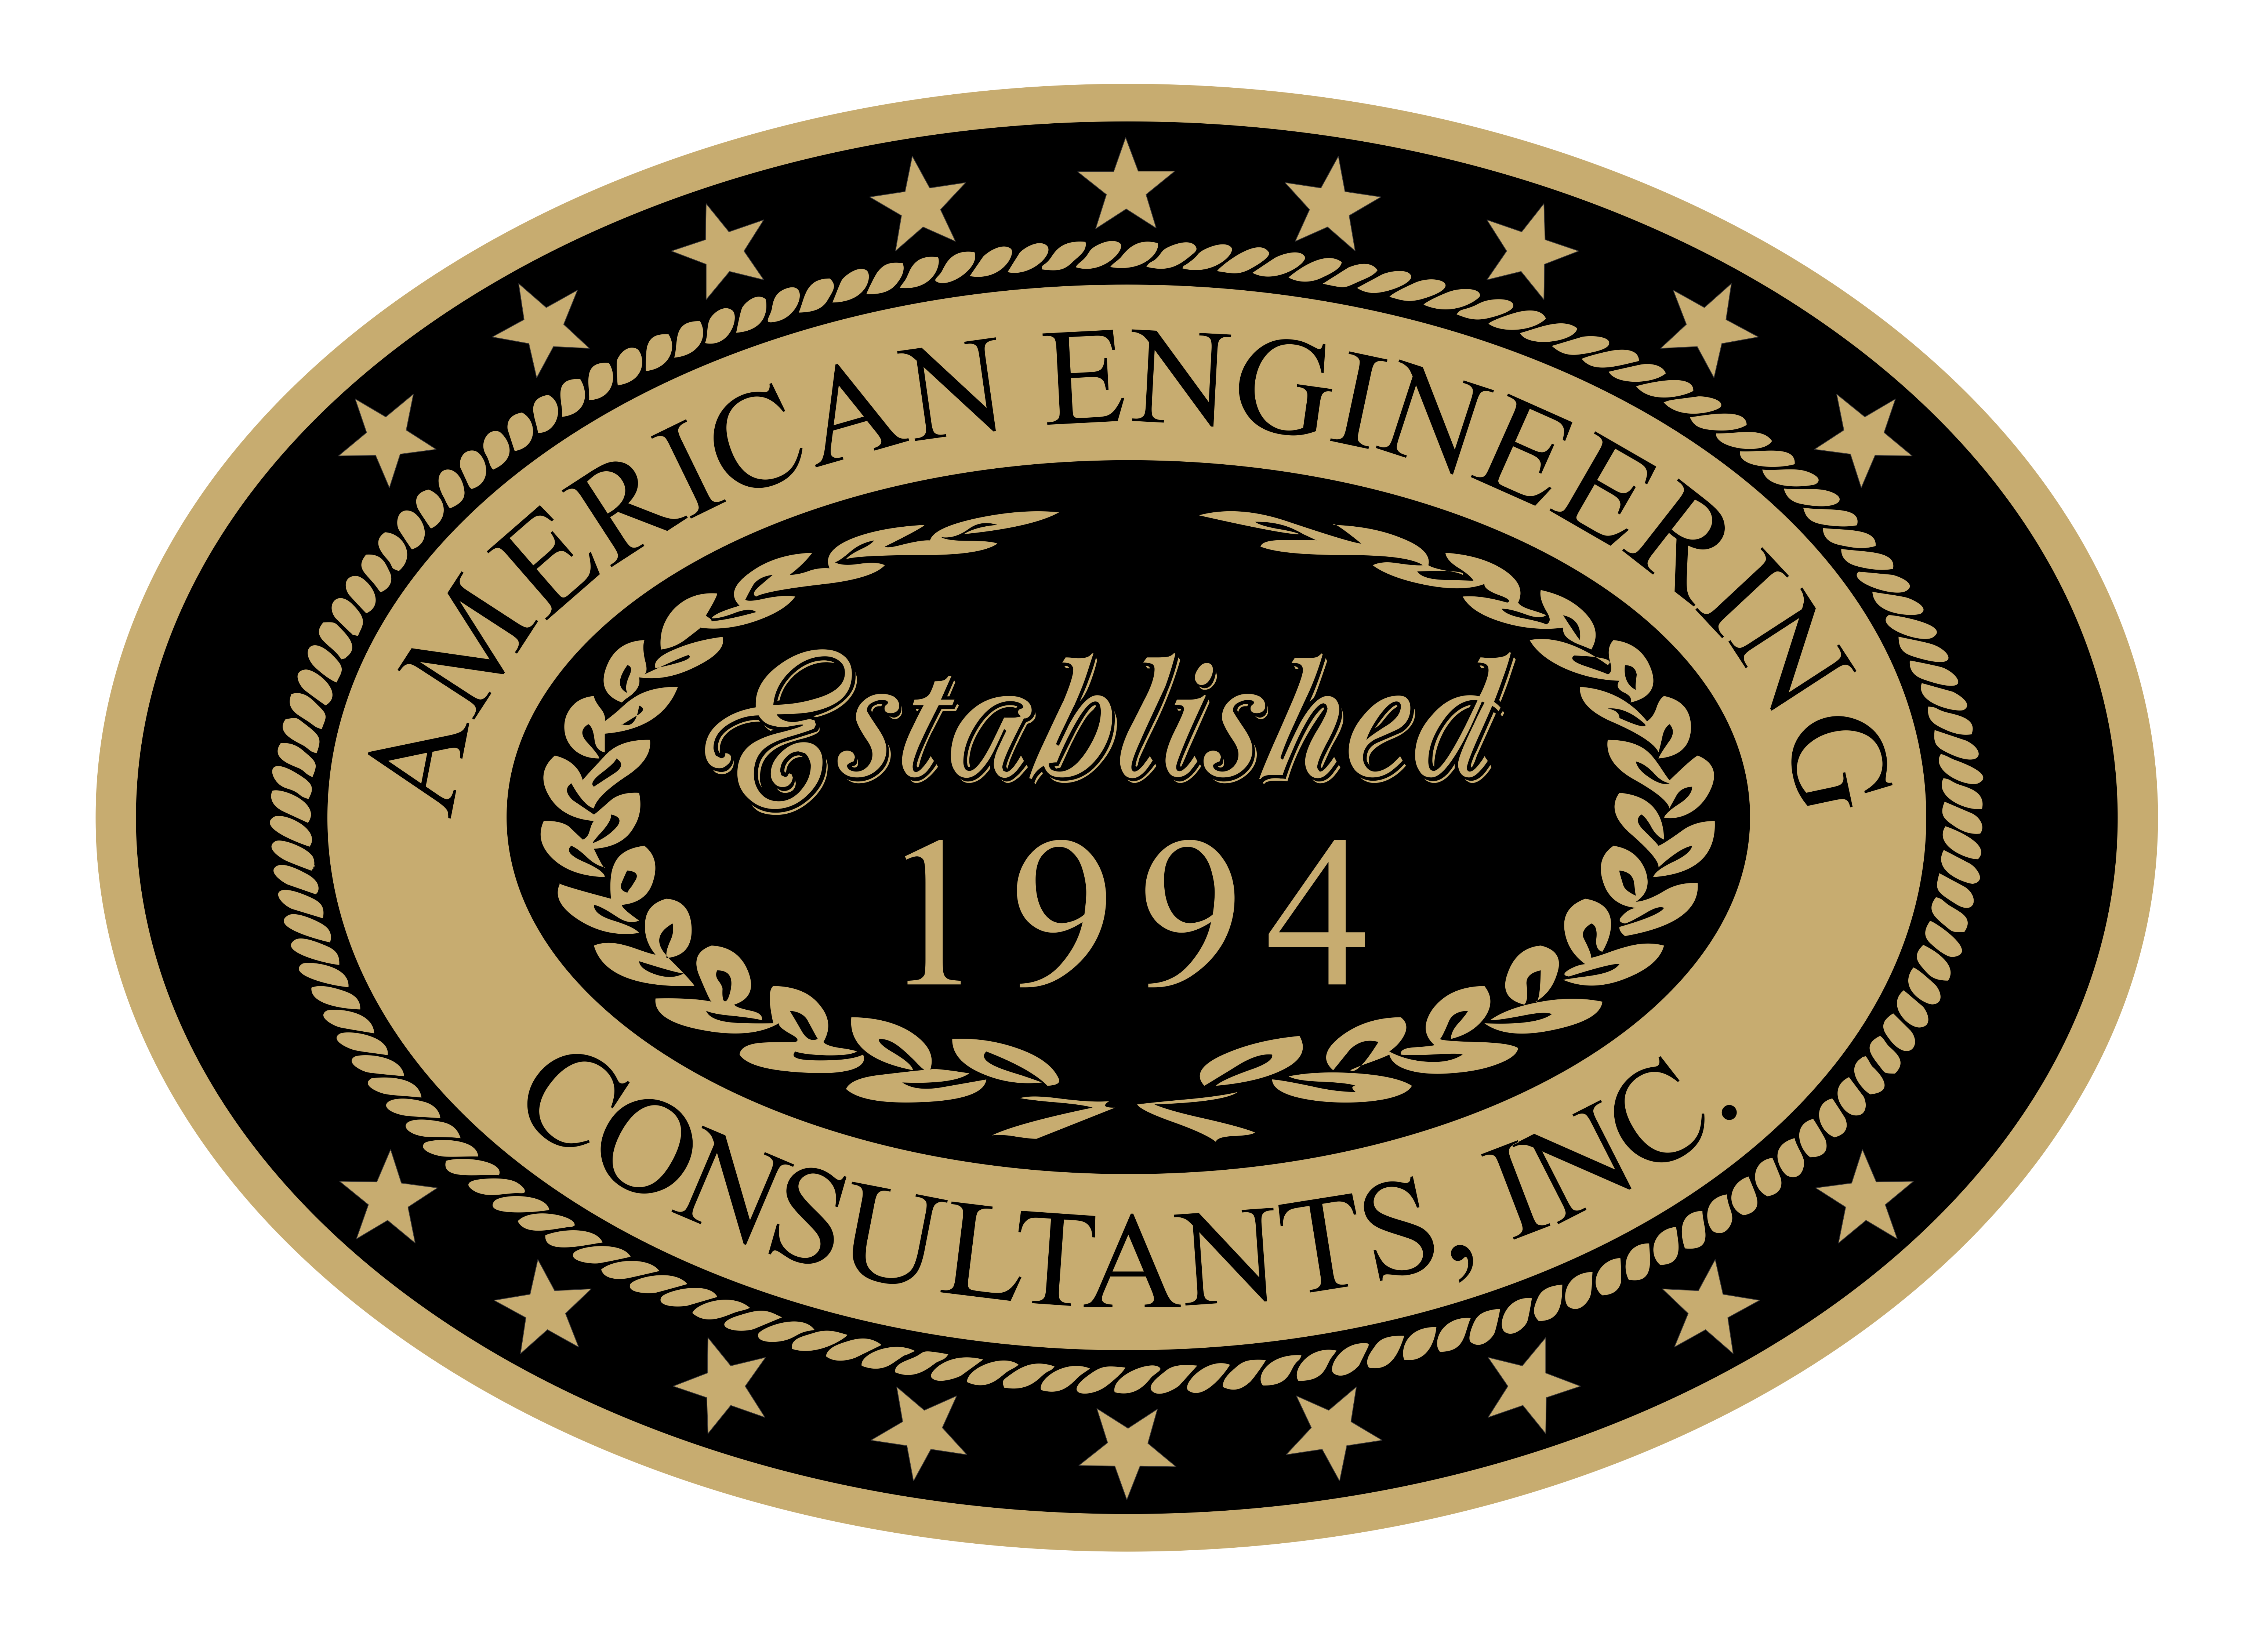 American Engineering Consultants, Inc.